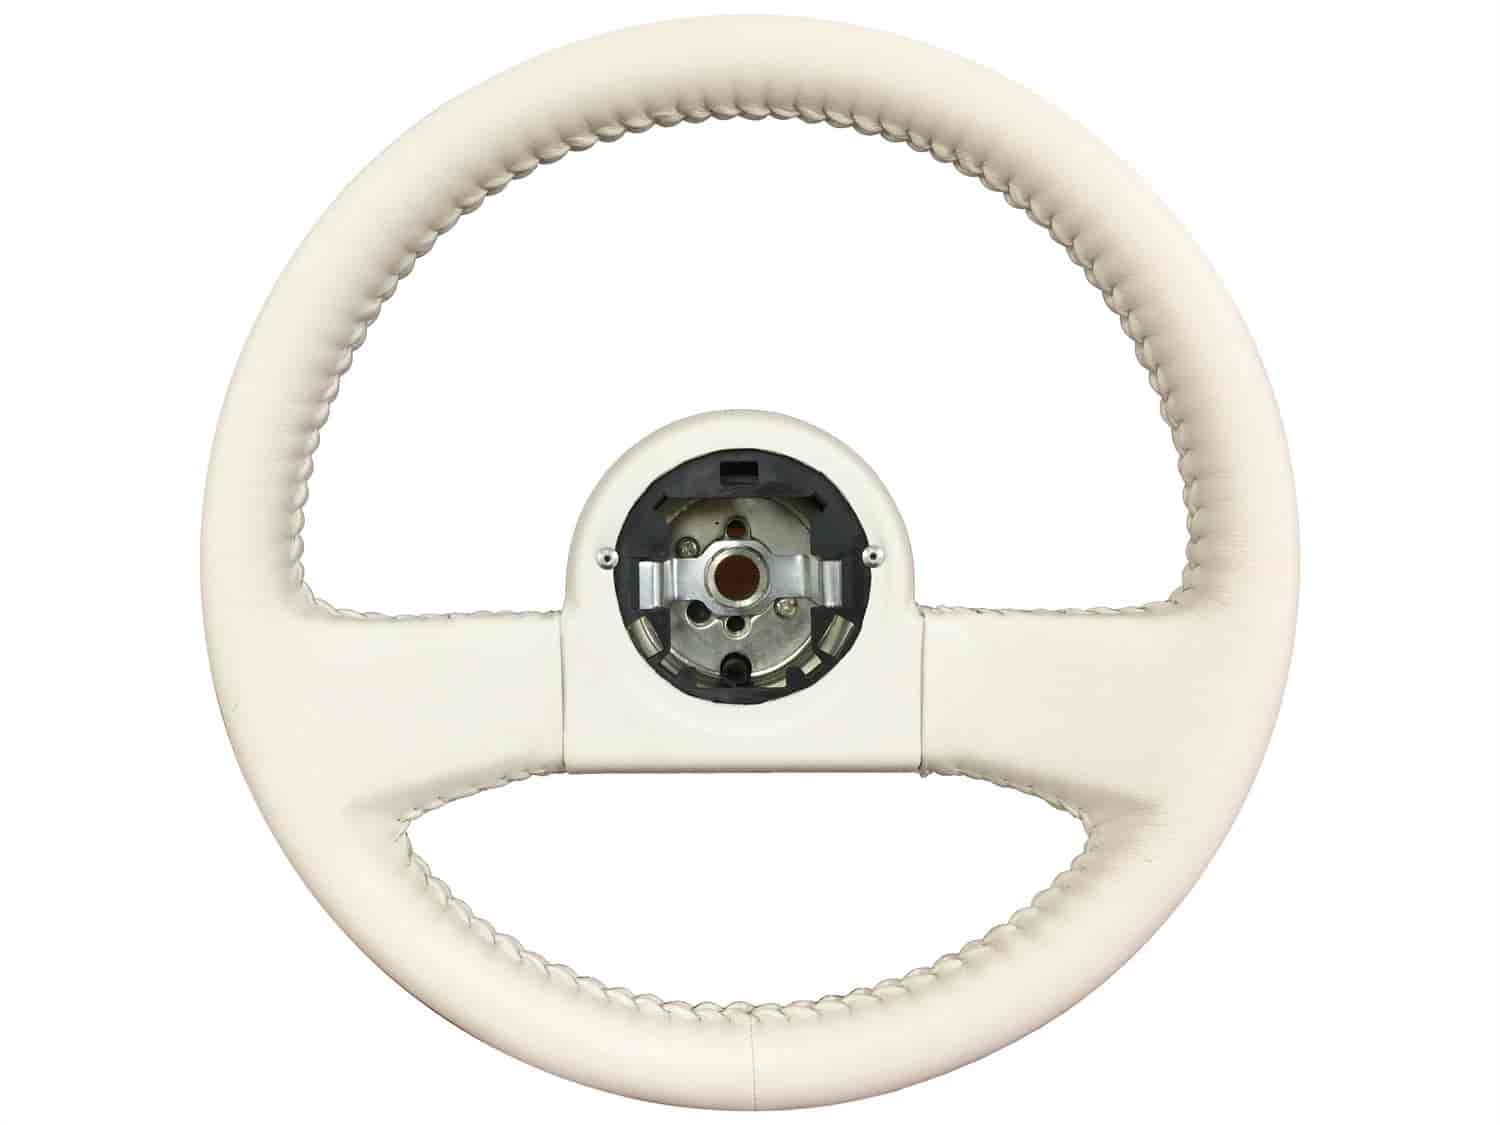 1988 C4 Corvette Anniversary Edition OE-Style Series Steering Wheel, 14 in. Diameter, Premium White Leather Grip